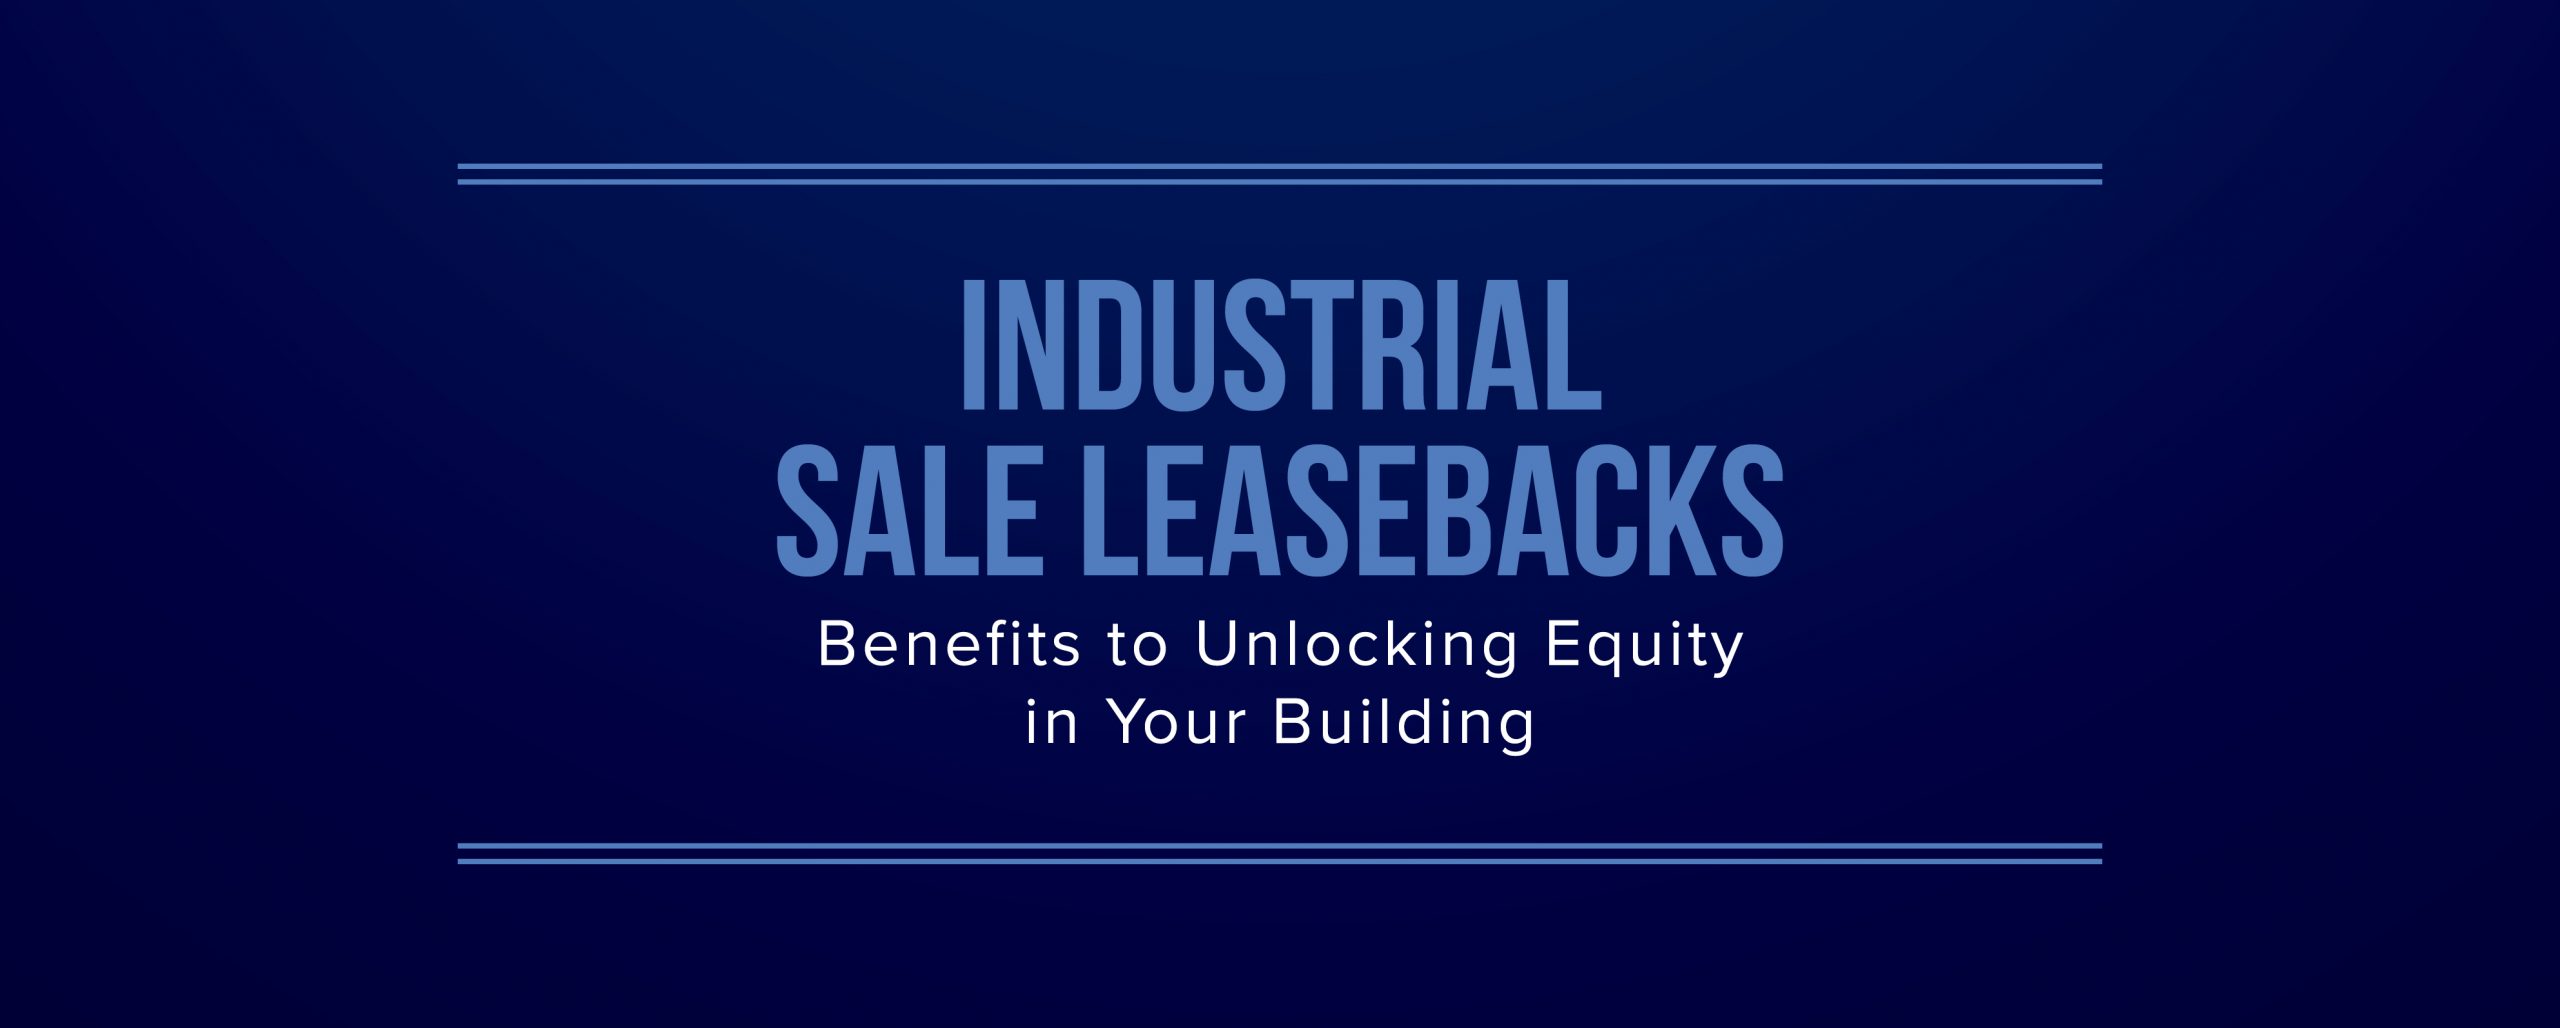 industrial sale leasebacks text